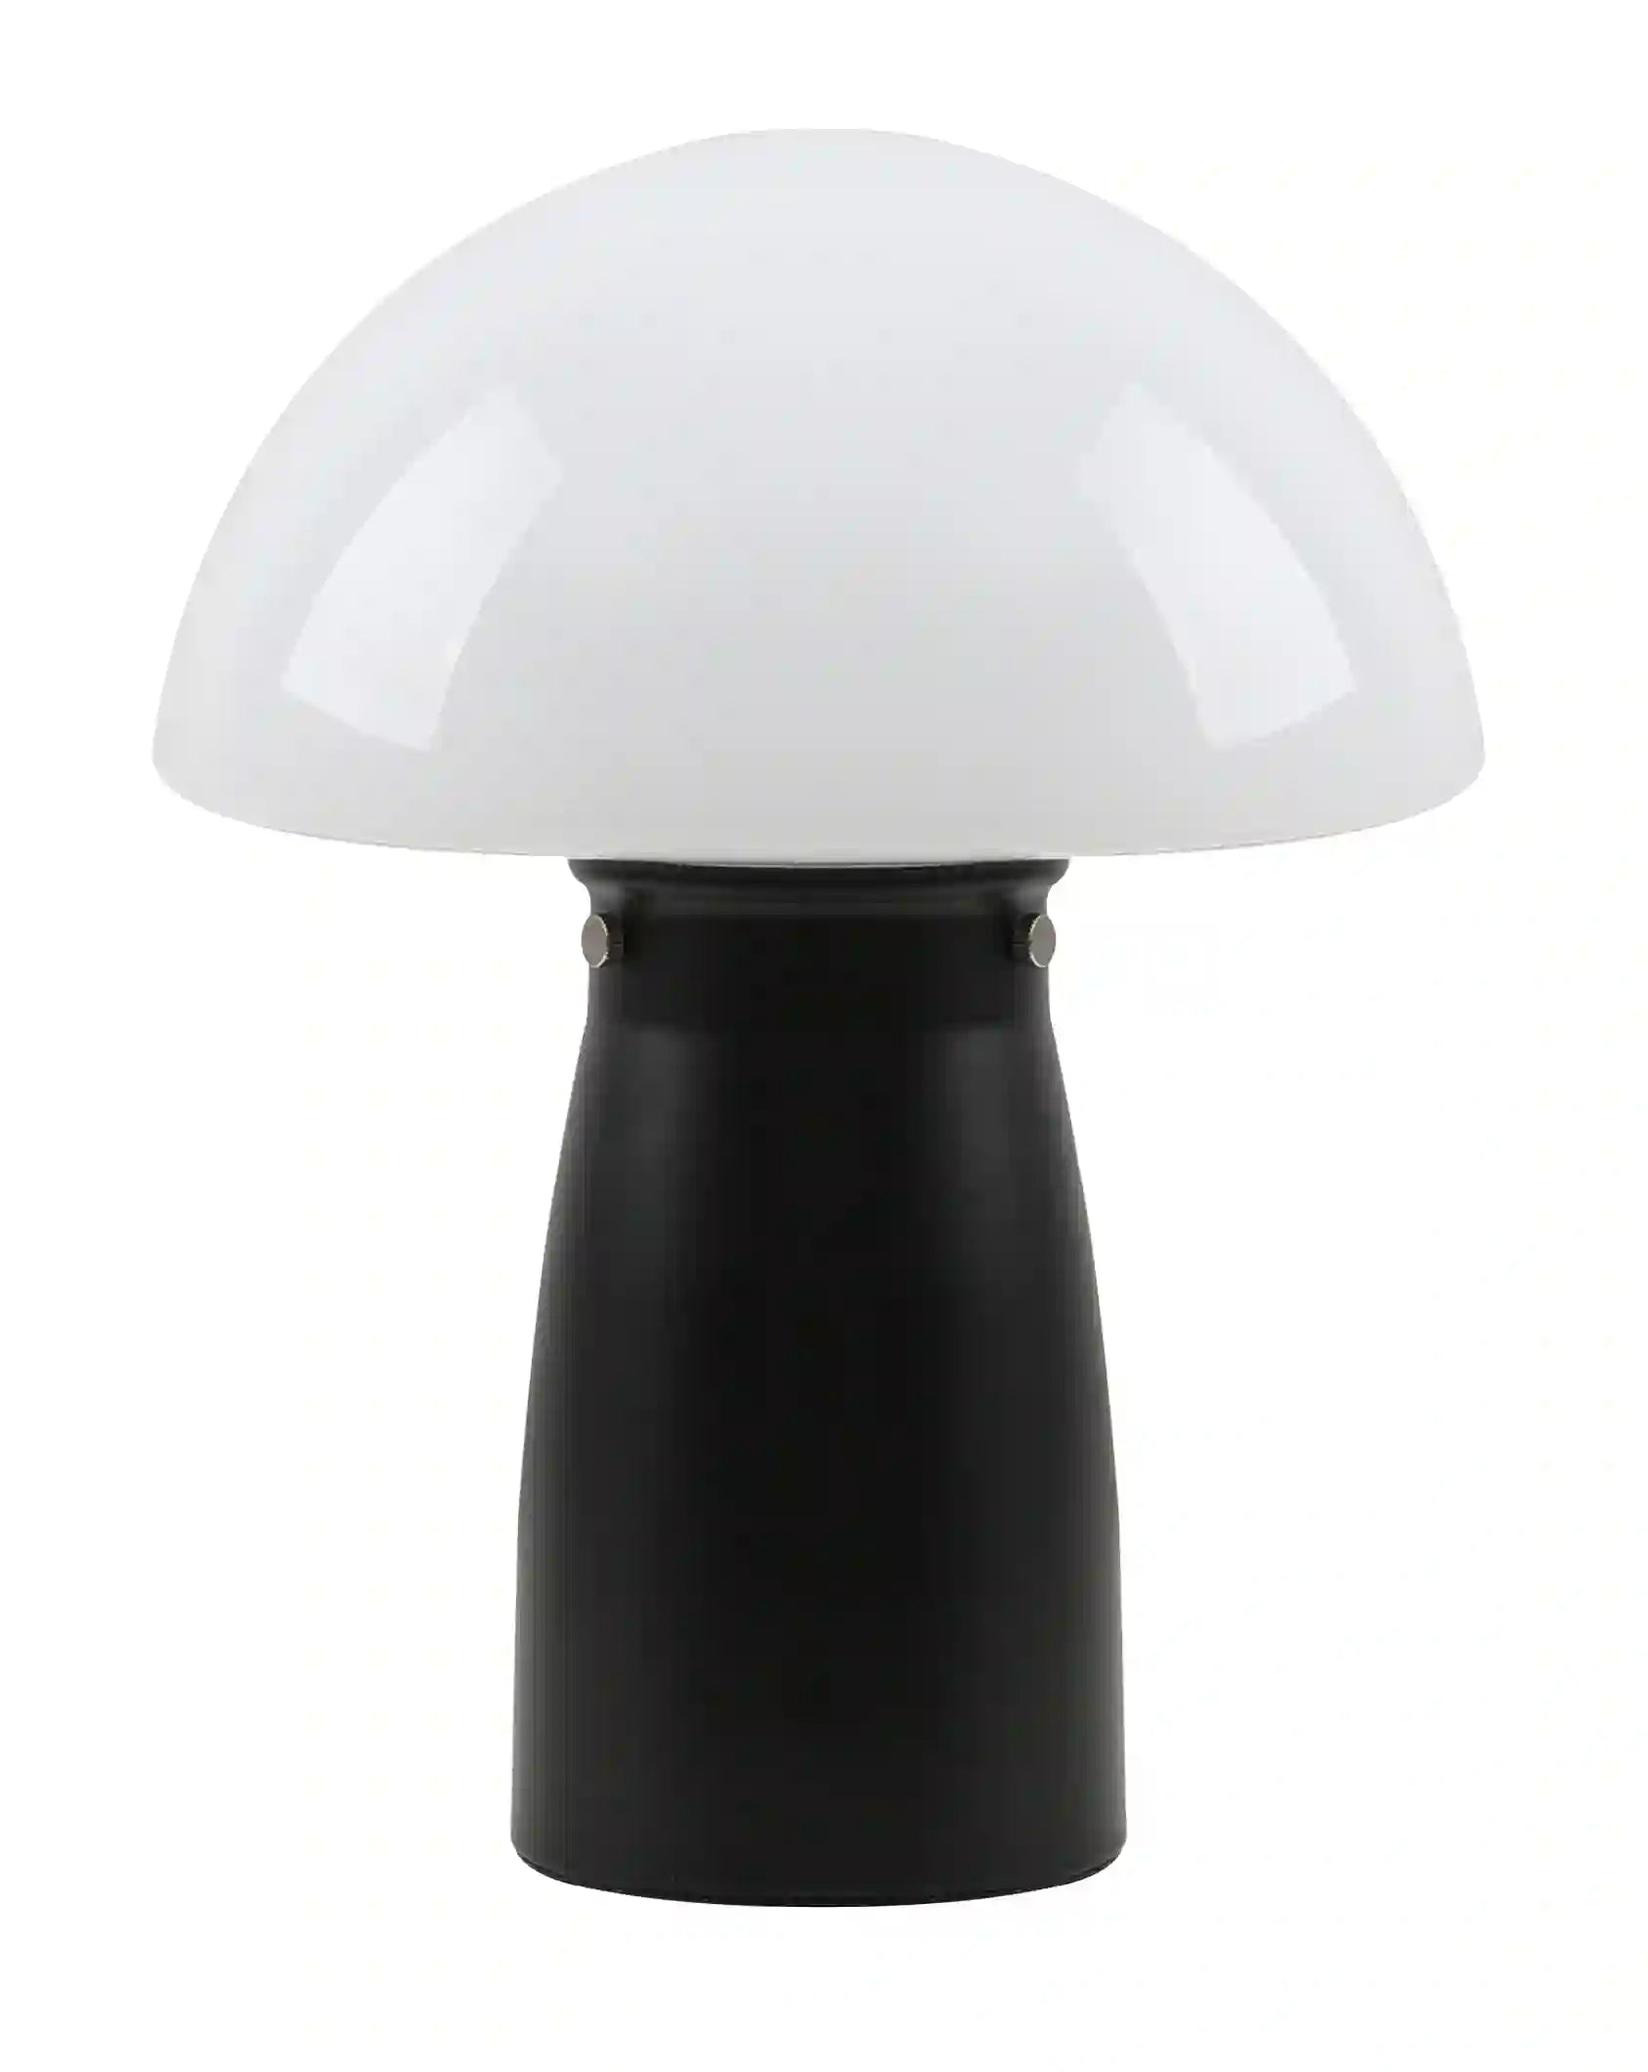 Selected image for Rea Light Clio HN2456-B/G Stona lampa, E27, 25W, Ø25cm, Crna